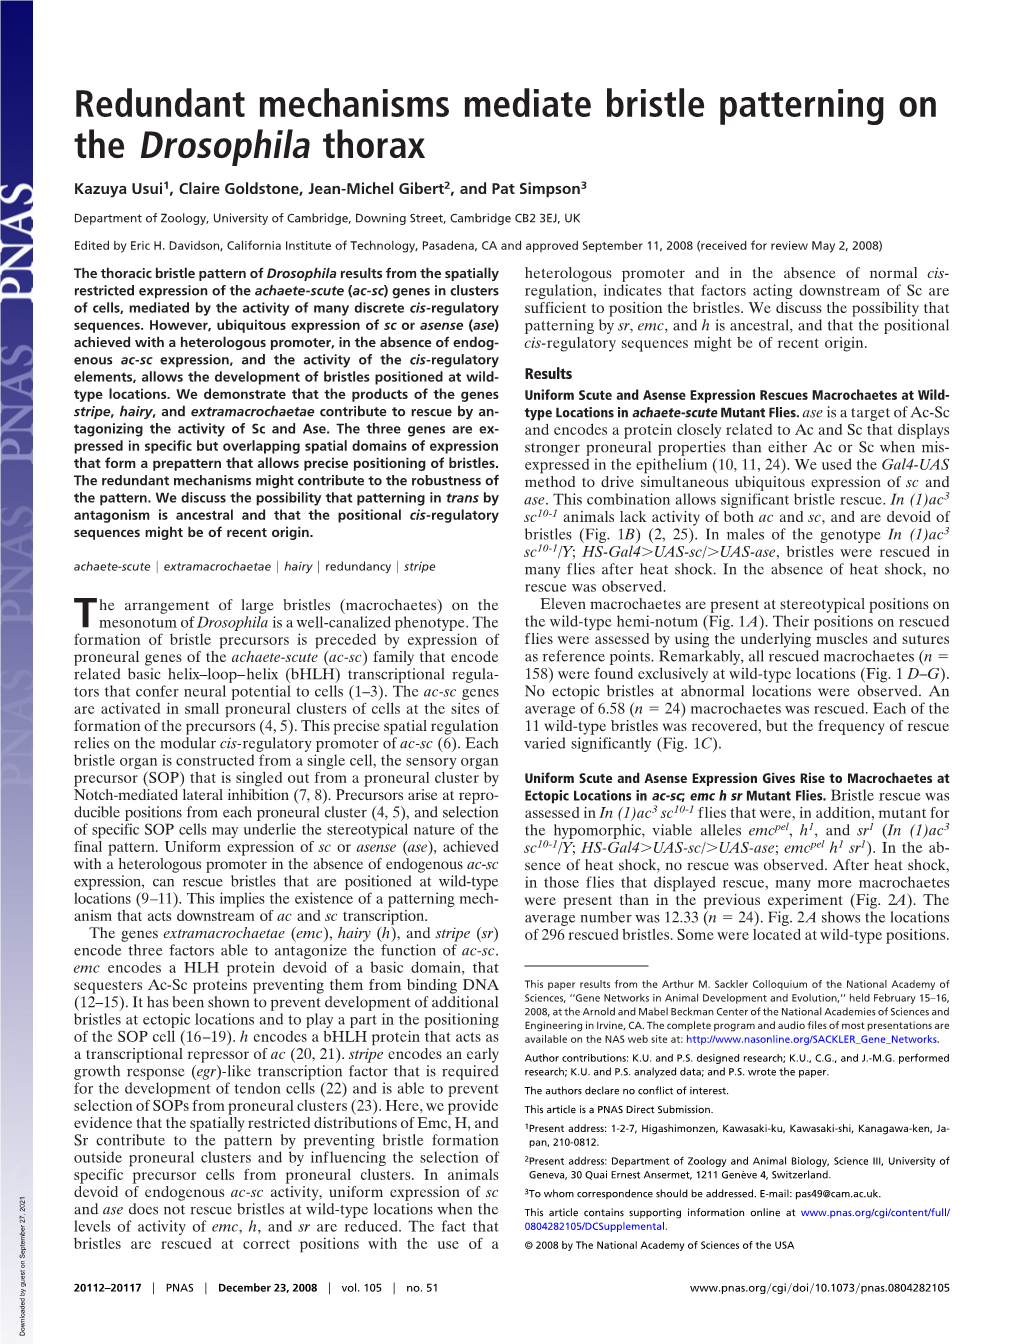 Redundant Mechanisms Mediate Bristle Patterning on the Drosophila Thorax